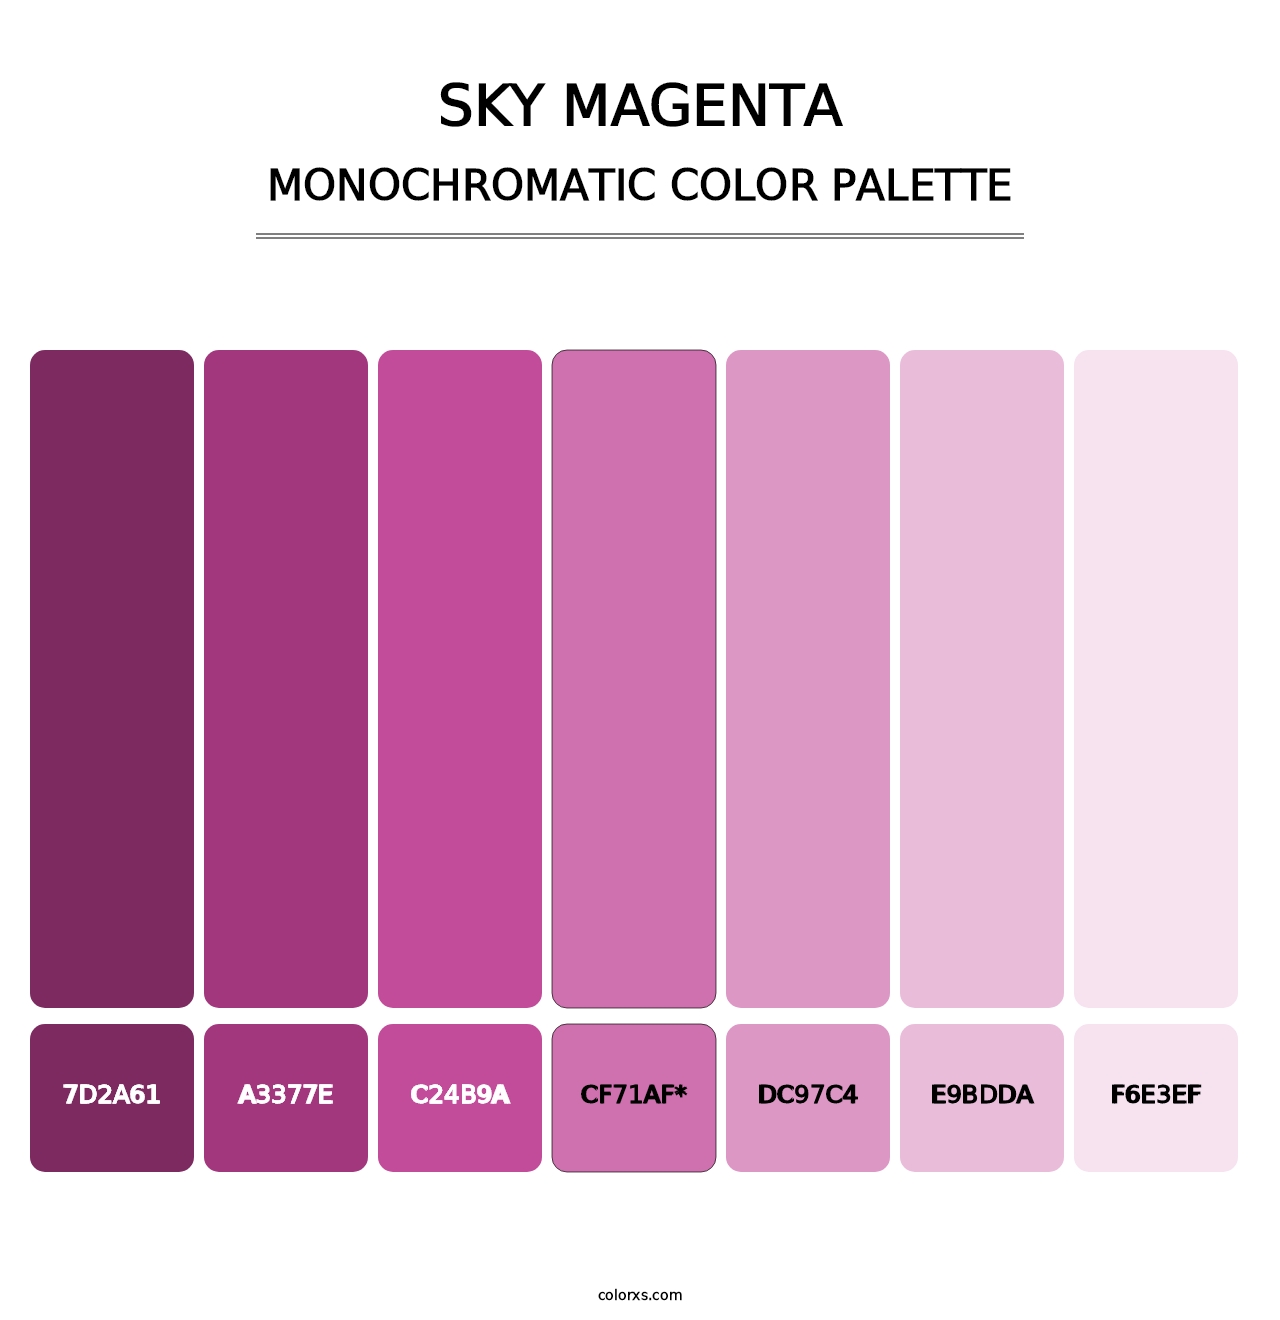 Sky Magenta - Monochromatic Color Palette